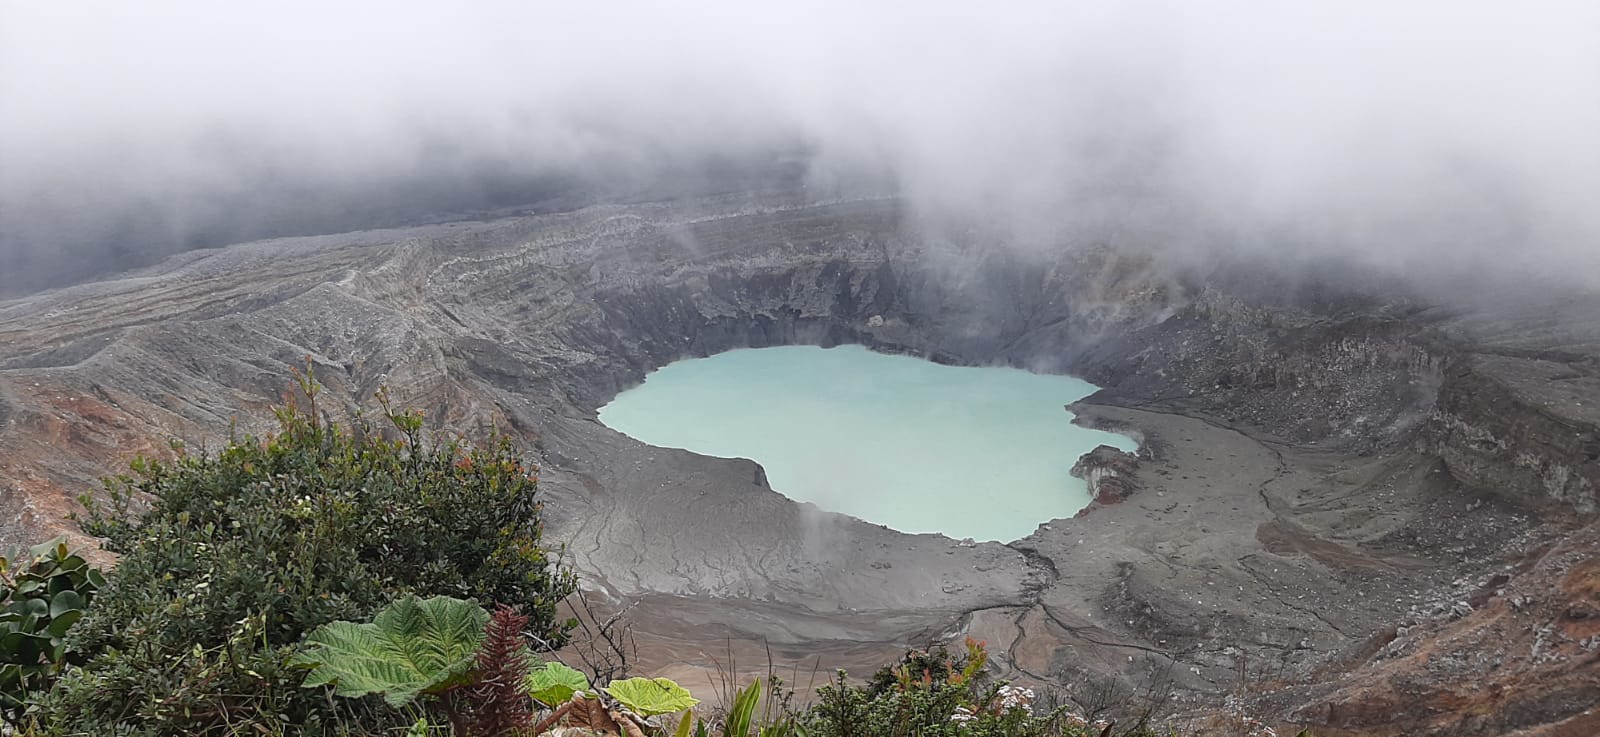 Ministerio de Salud anuncia apertura de sendero a la laguna del Volcán Poás el próximo mes